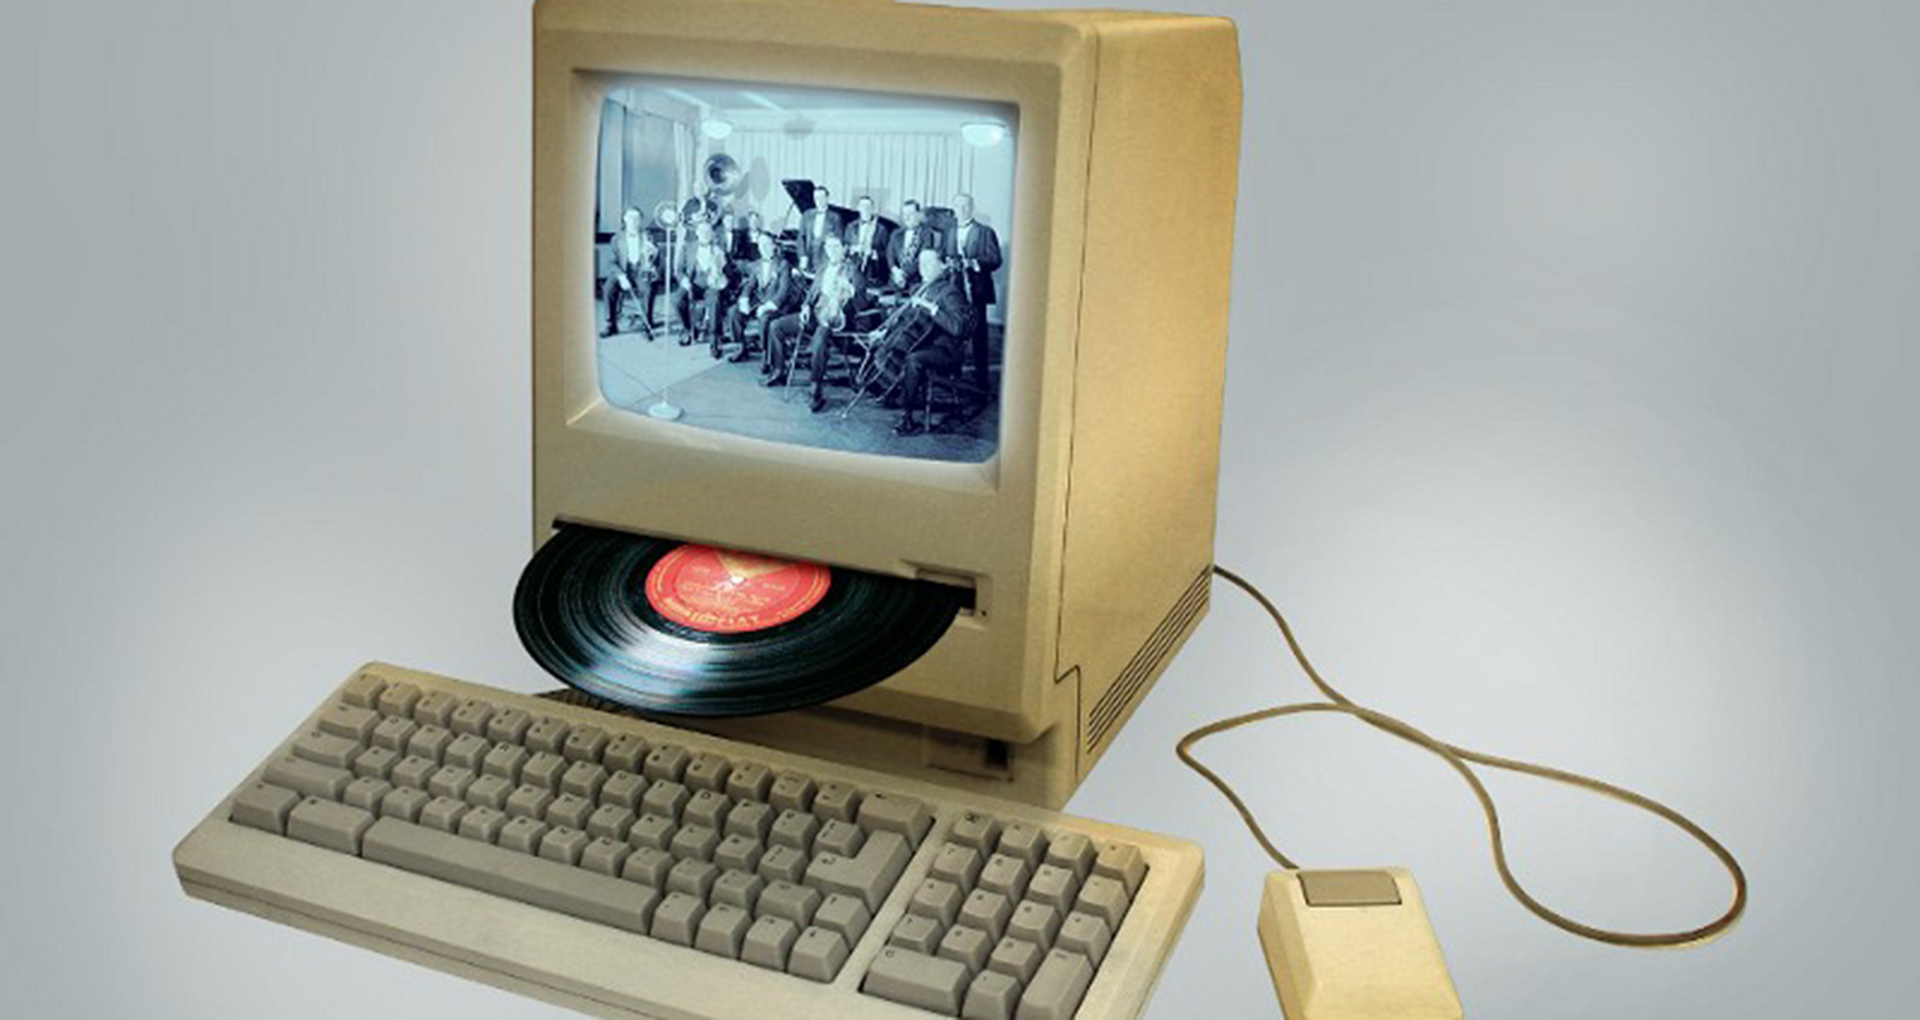 Computer vintage